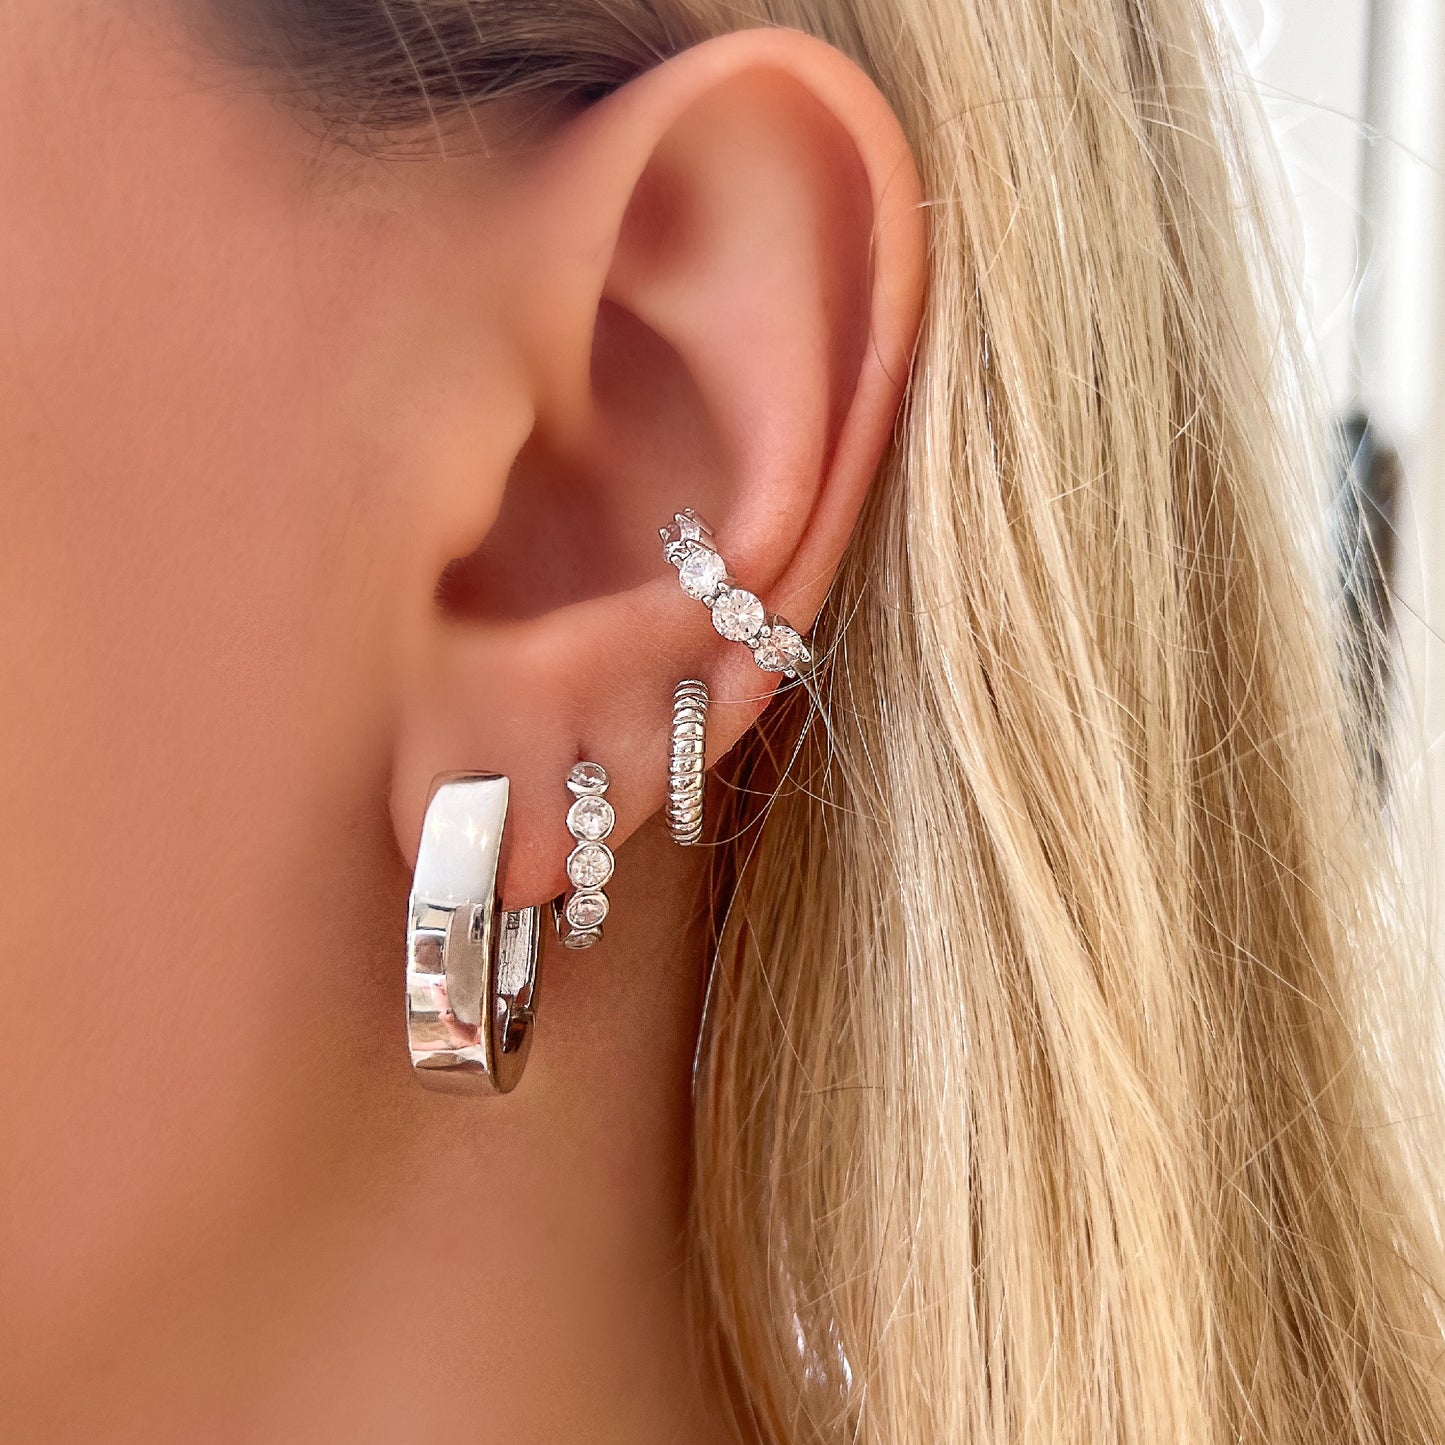 Silver CZ Ear Cuff from Alexandra Marks Jewelry